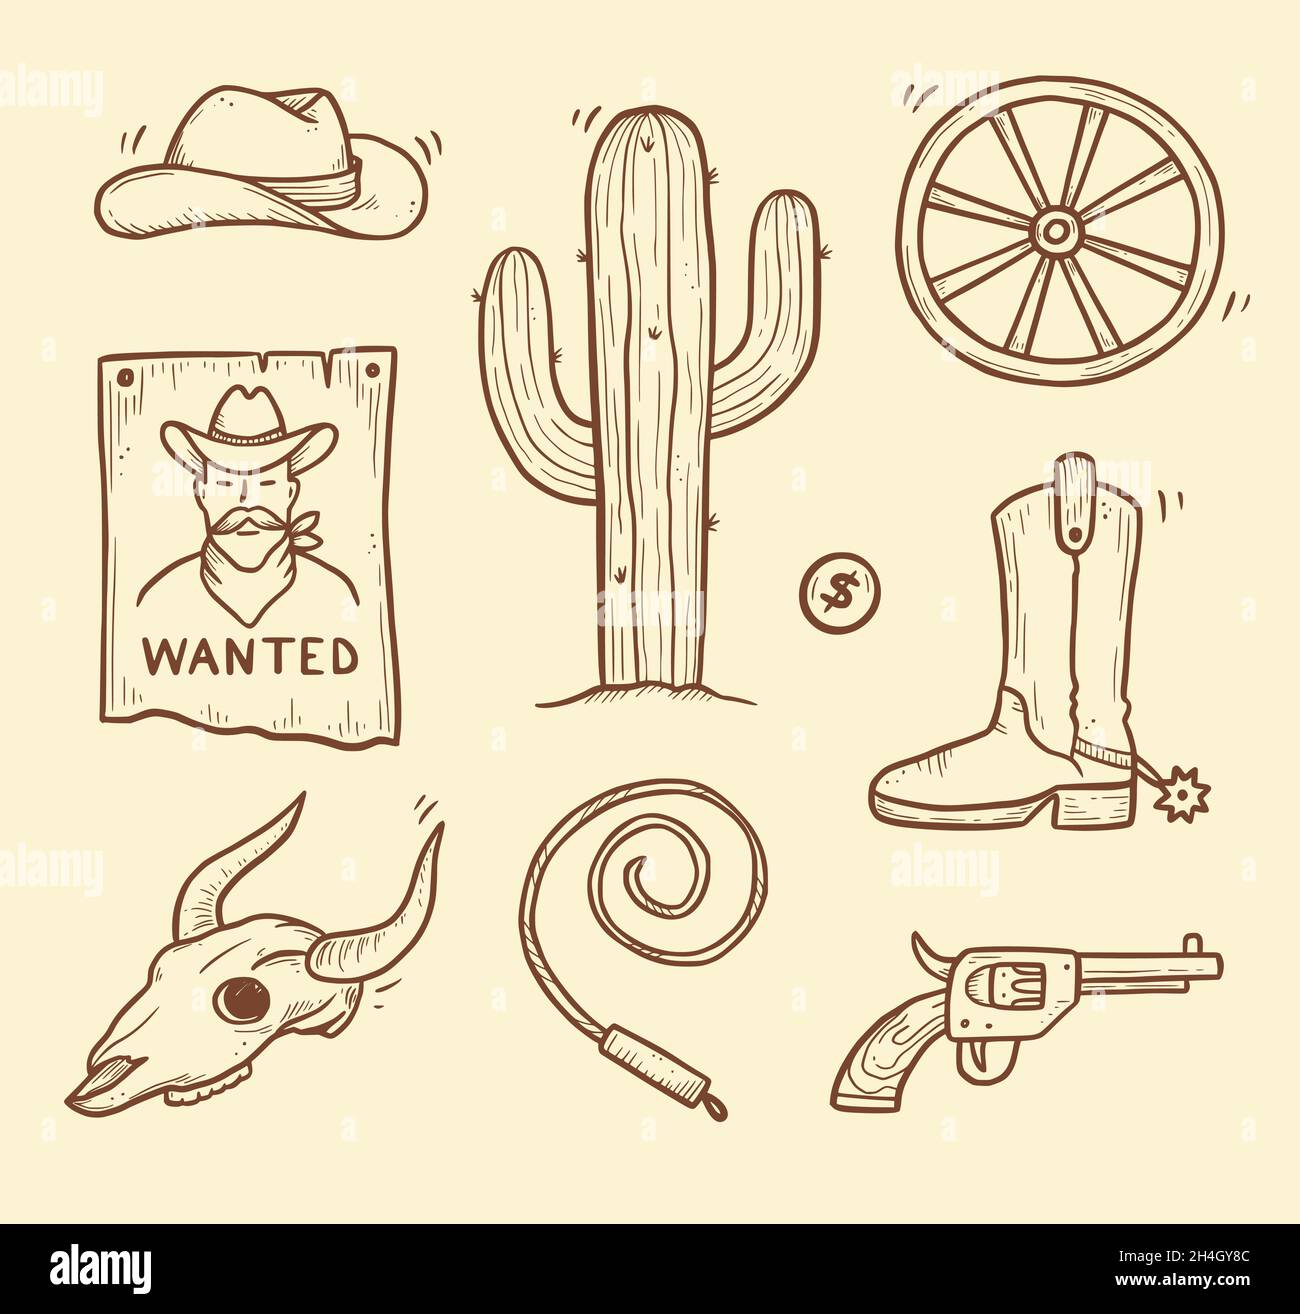 Cowboy western doodle set. Hand drawn sketch line style. Cowboy hat, cow skull, gun, cactus element. Wild west vector illustration. Stock Vector